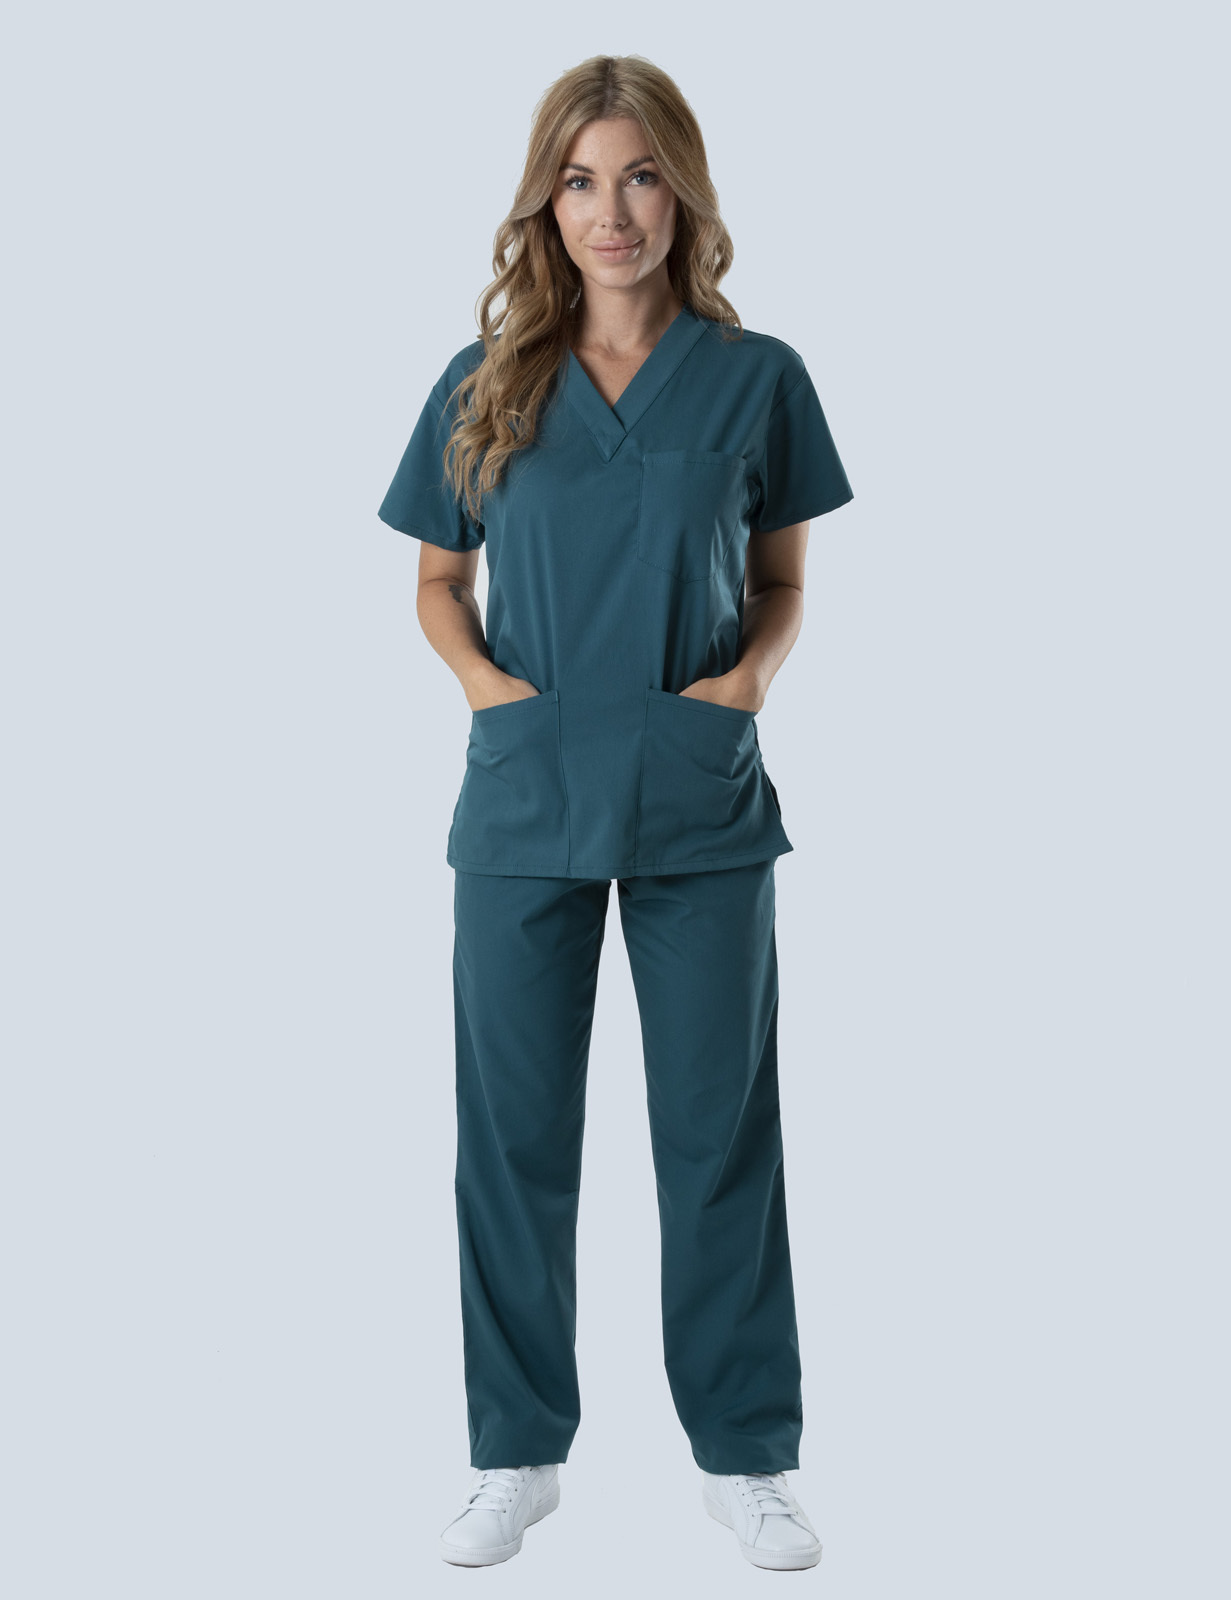 Rockhampton Hospital Emergency Department Clinical Nurse Uniform Set Bundle (4 Pocket Top and Cargo Pants in Navy + 3 Logos)